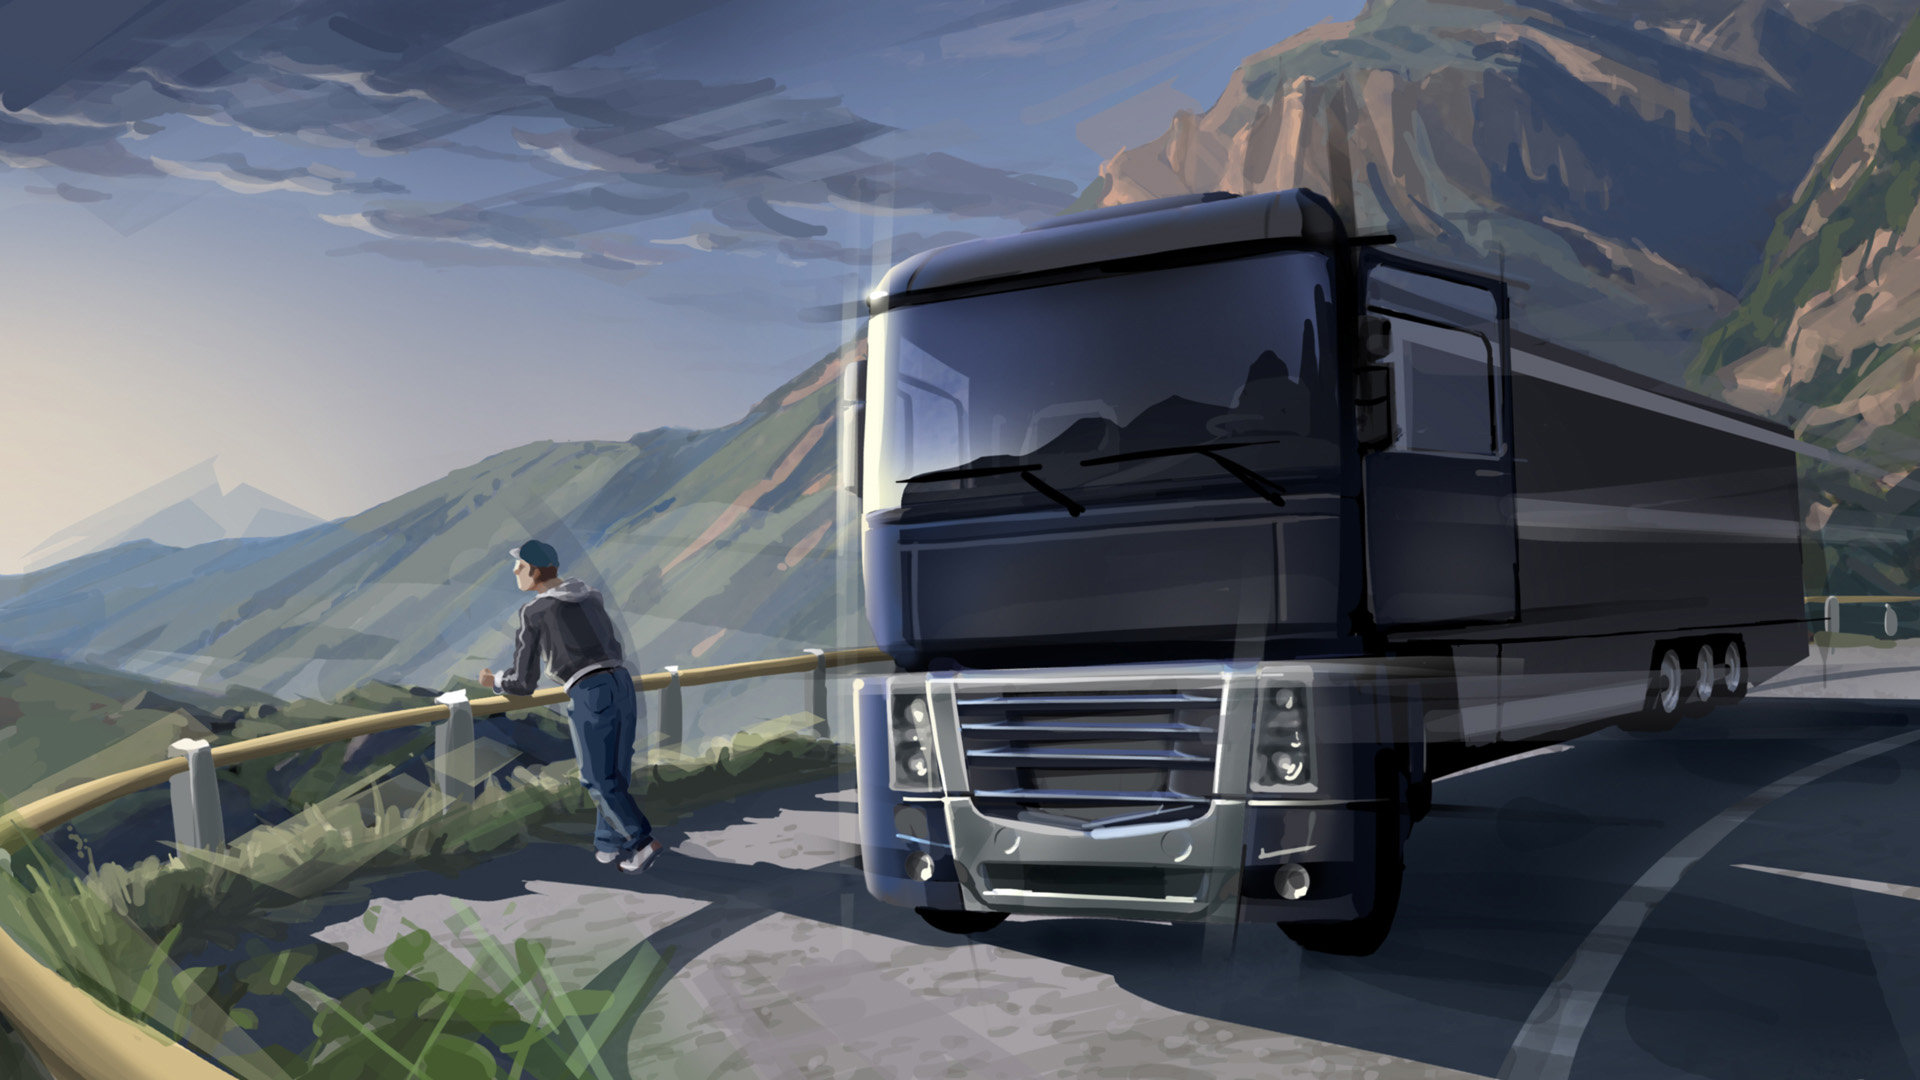 Euro Truck Simulator 2 Wallpapers Hd For Desktop Backgrounds